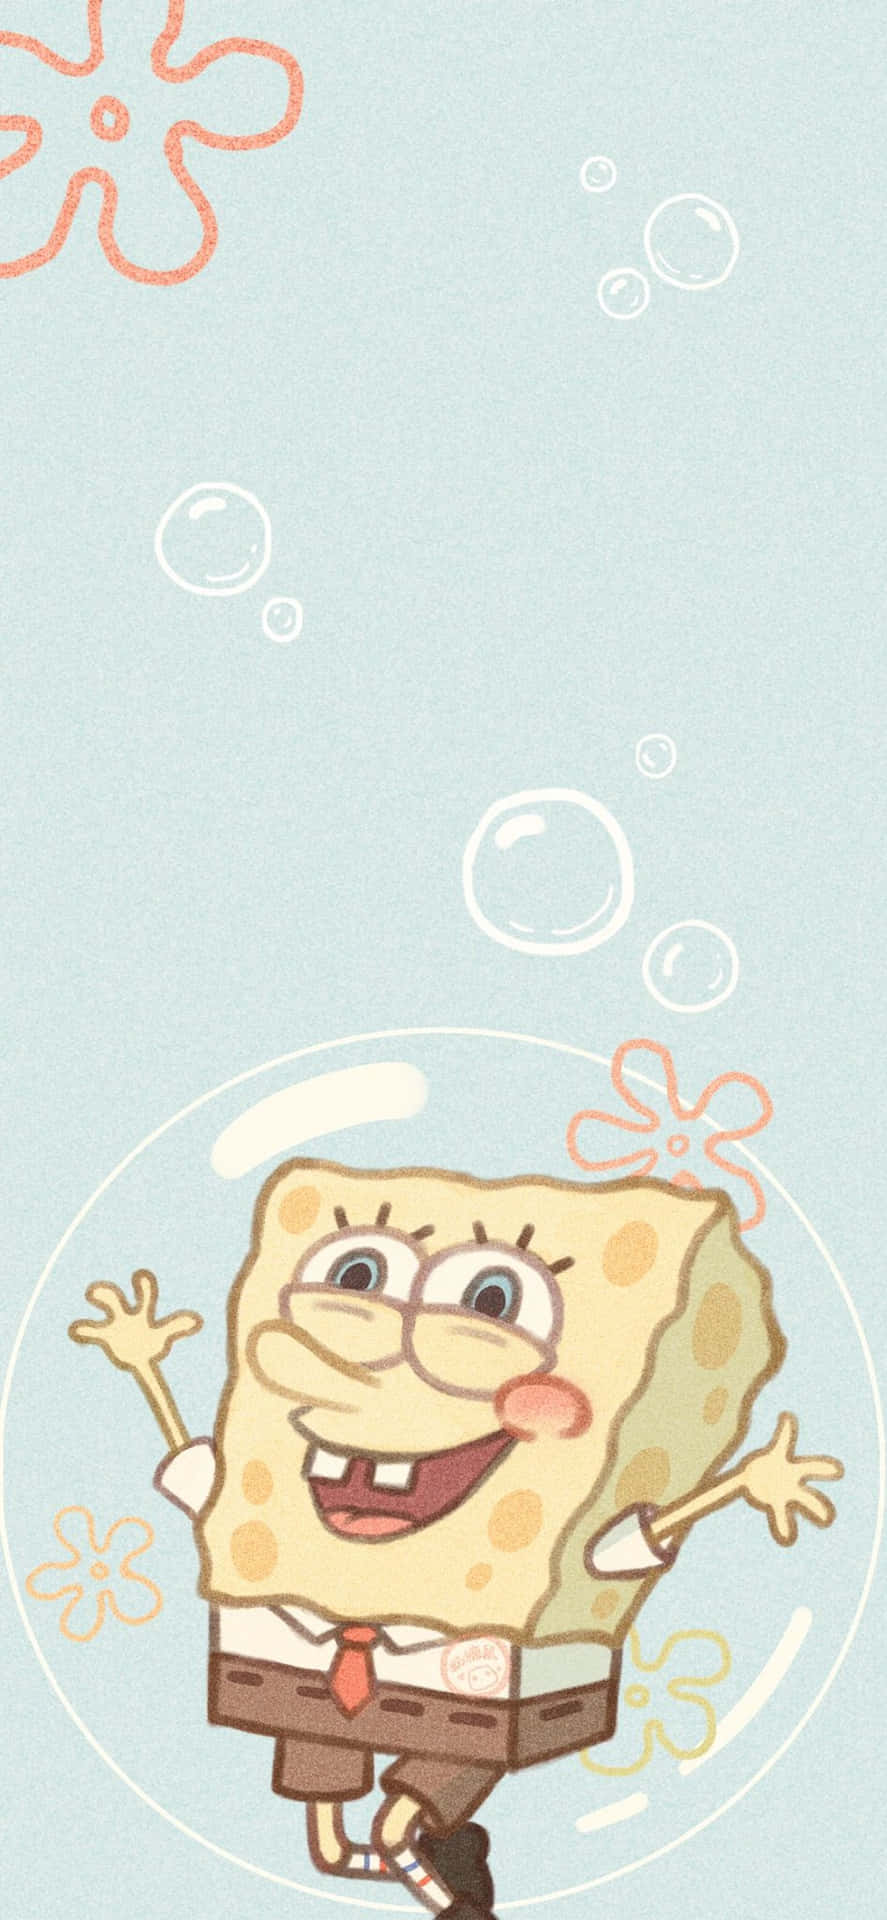 Aesthetic Spongebob living his best life